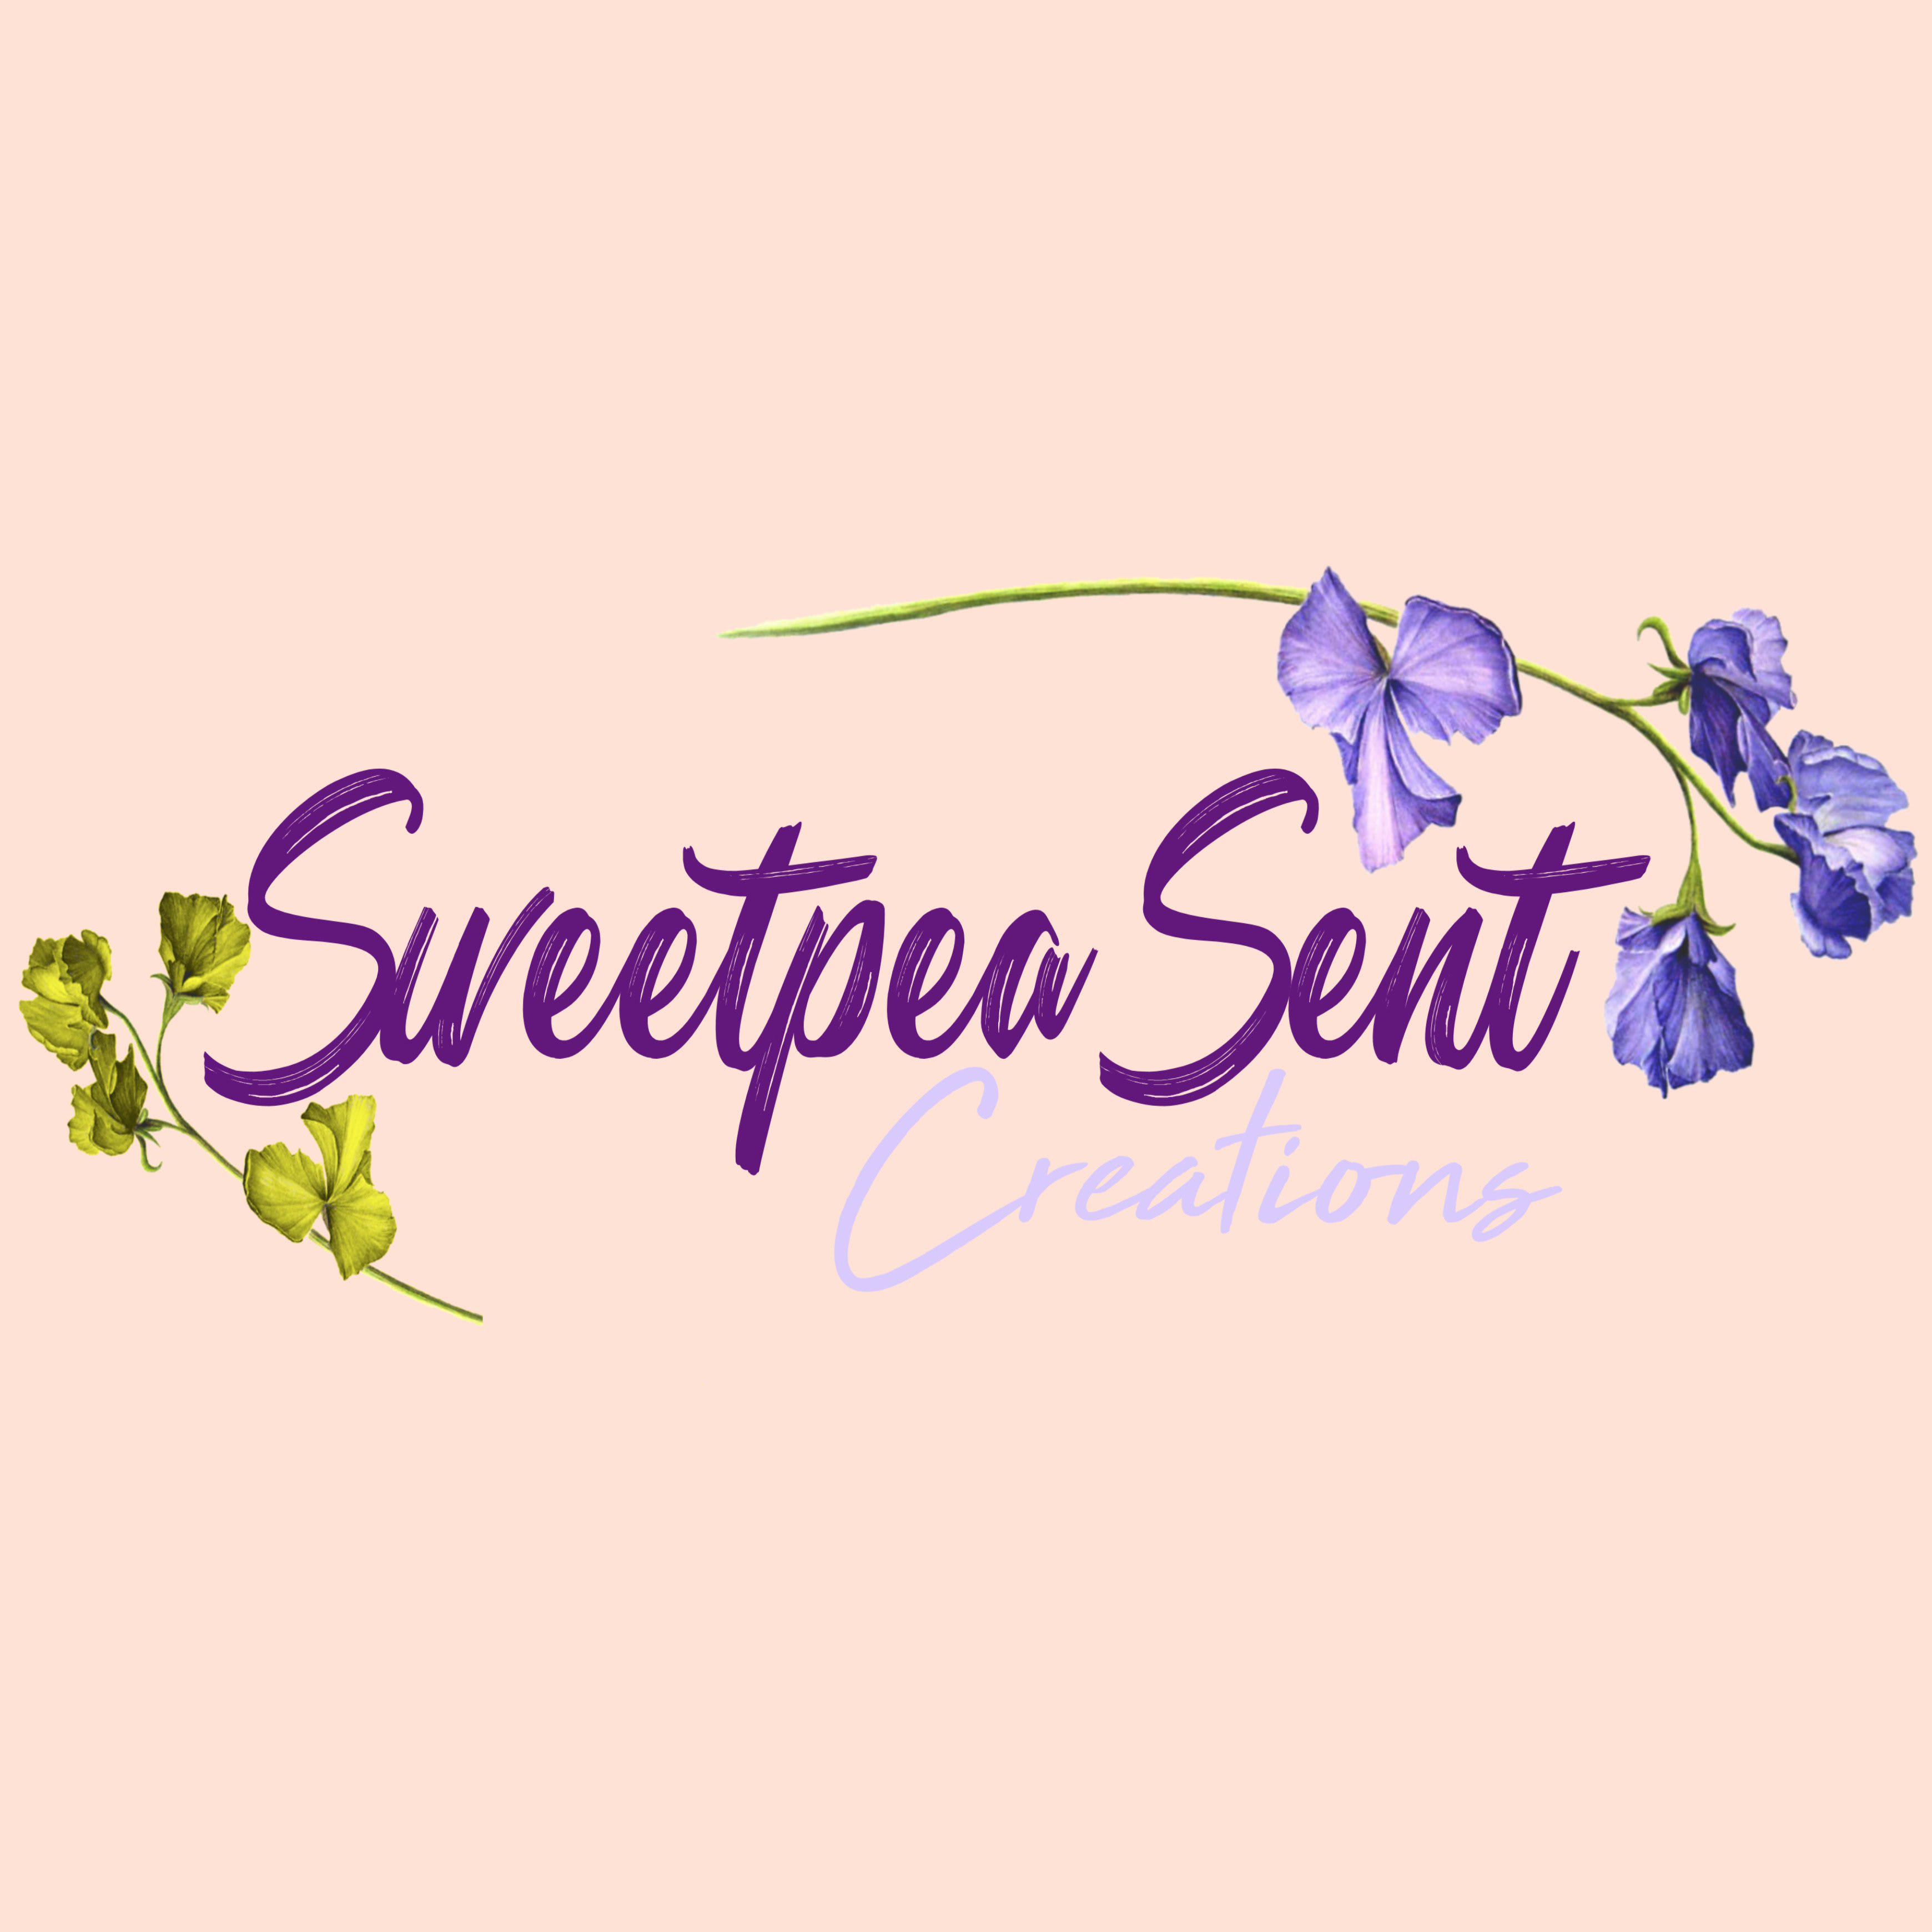 Sweetpea Sent Creations